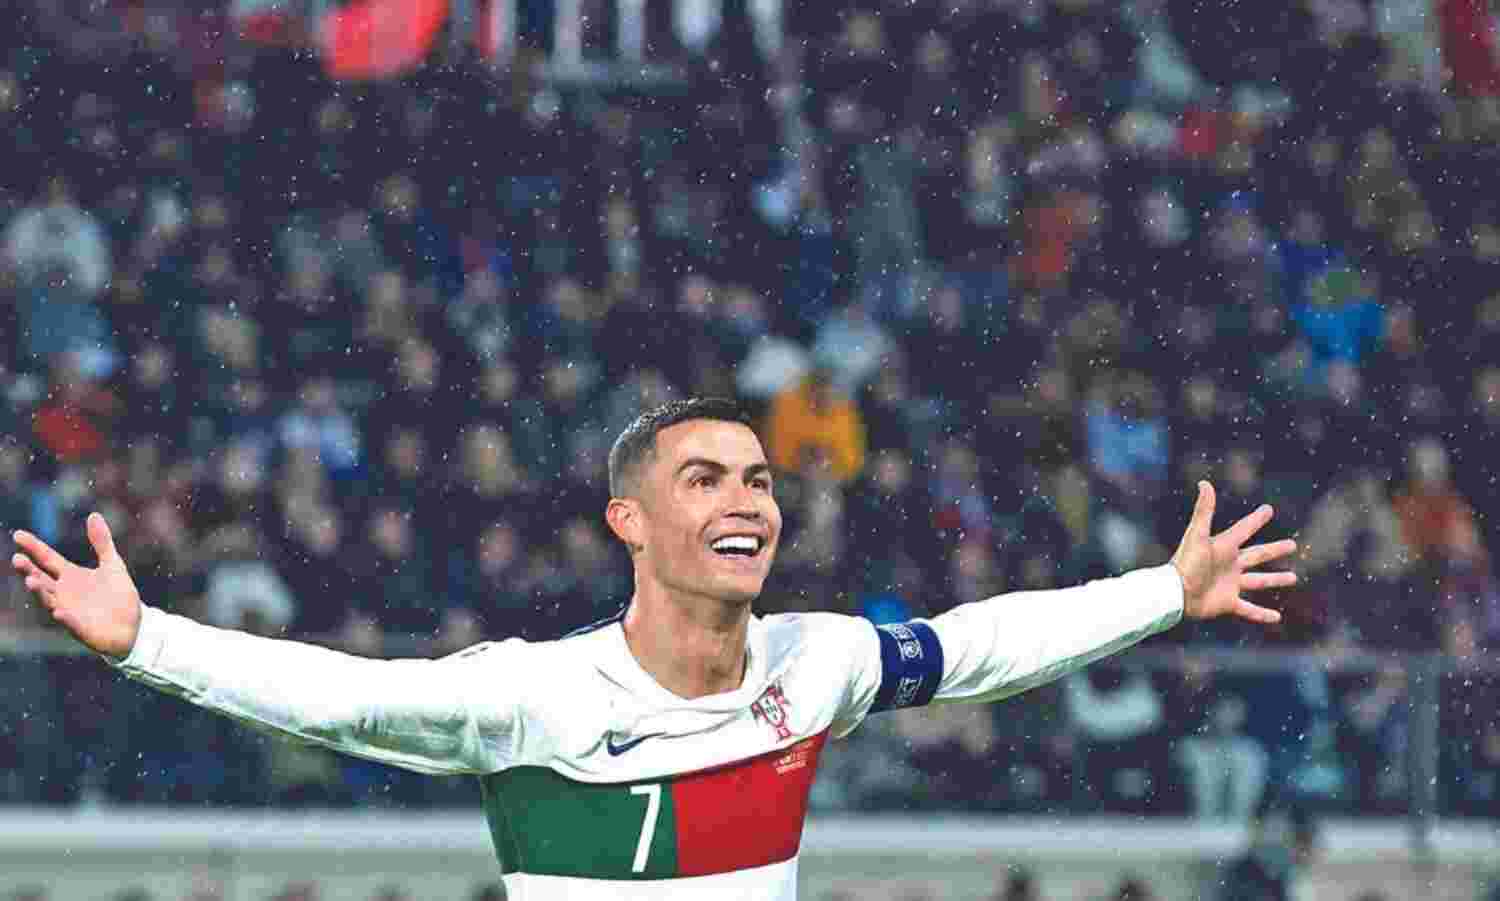 Ronaldo extends excellent streak with brace